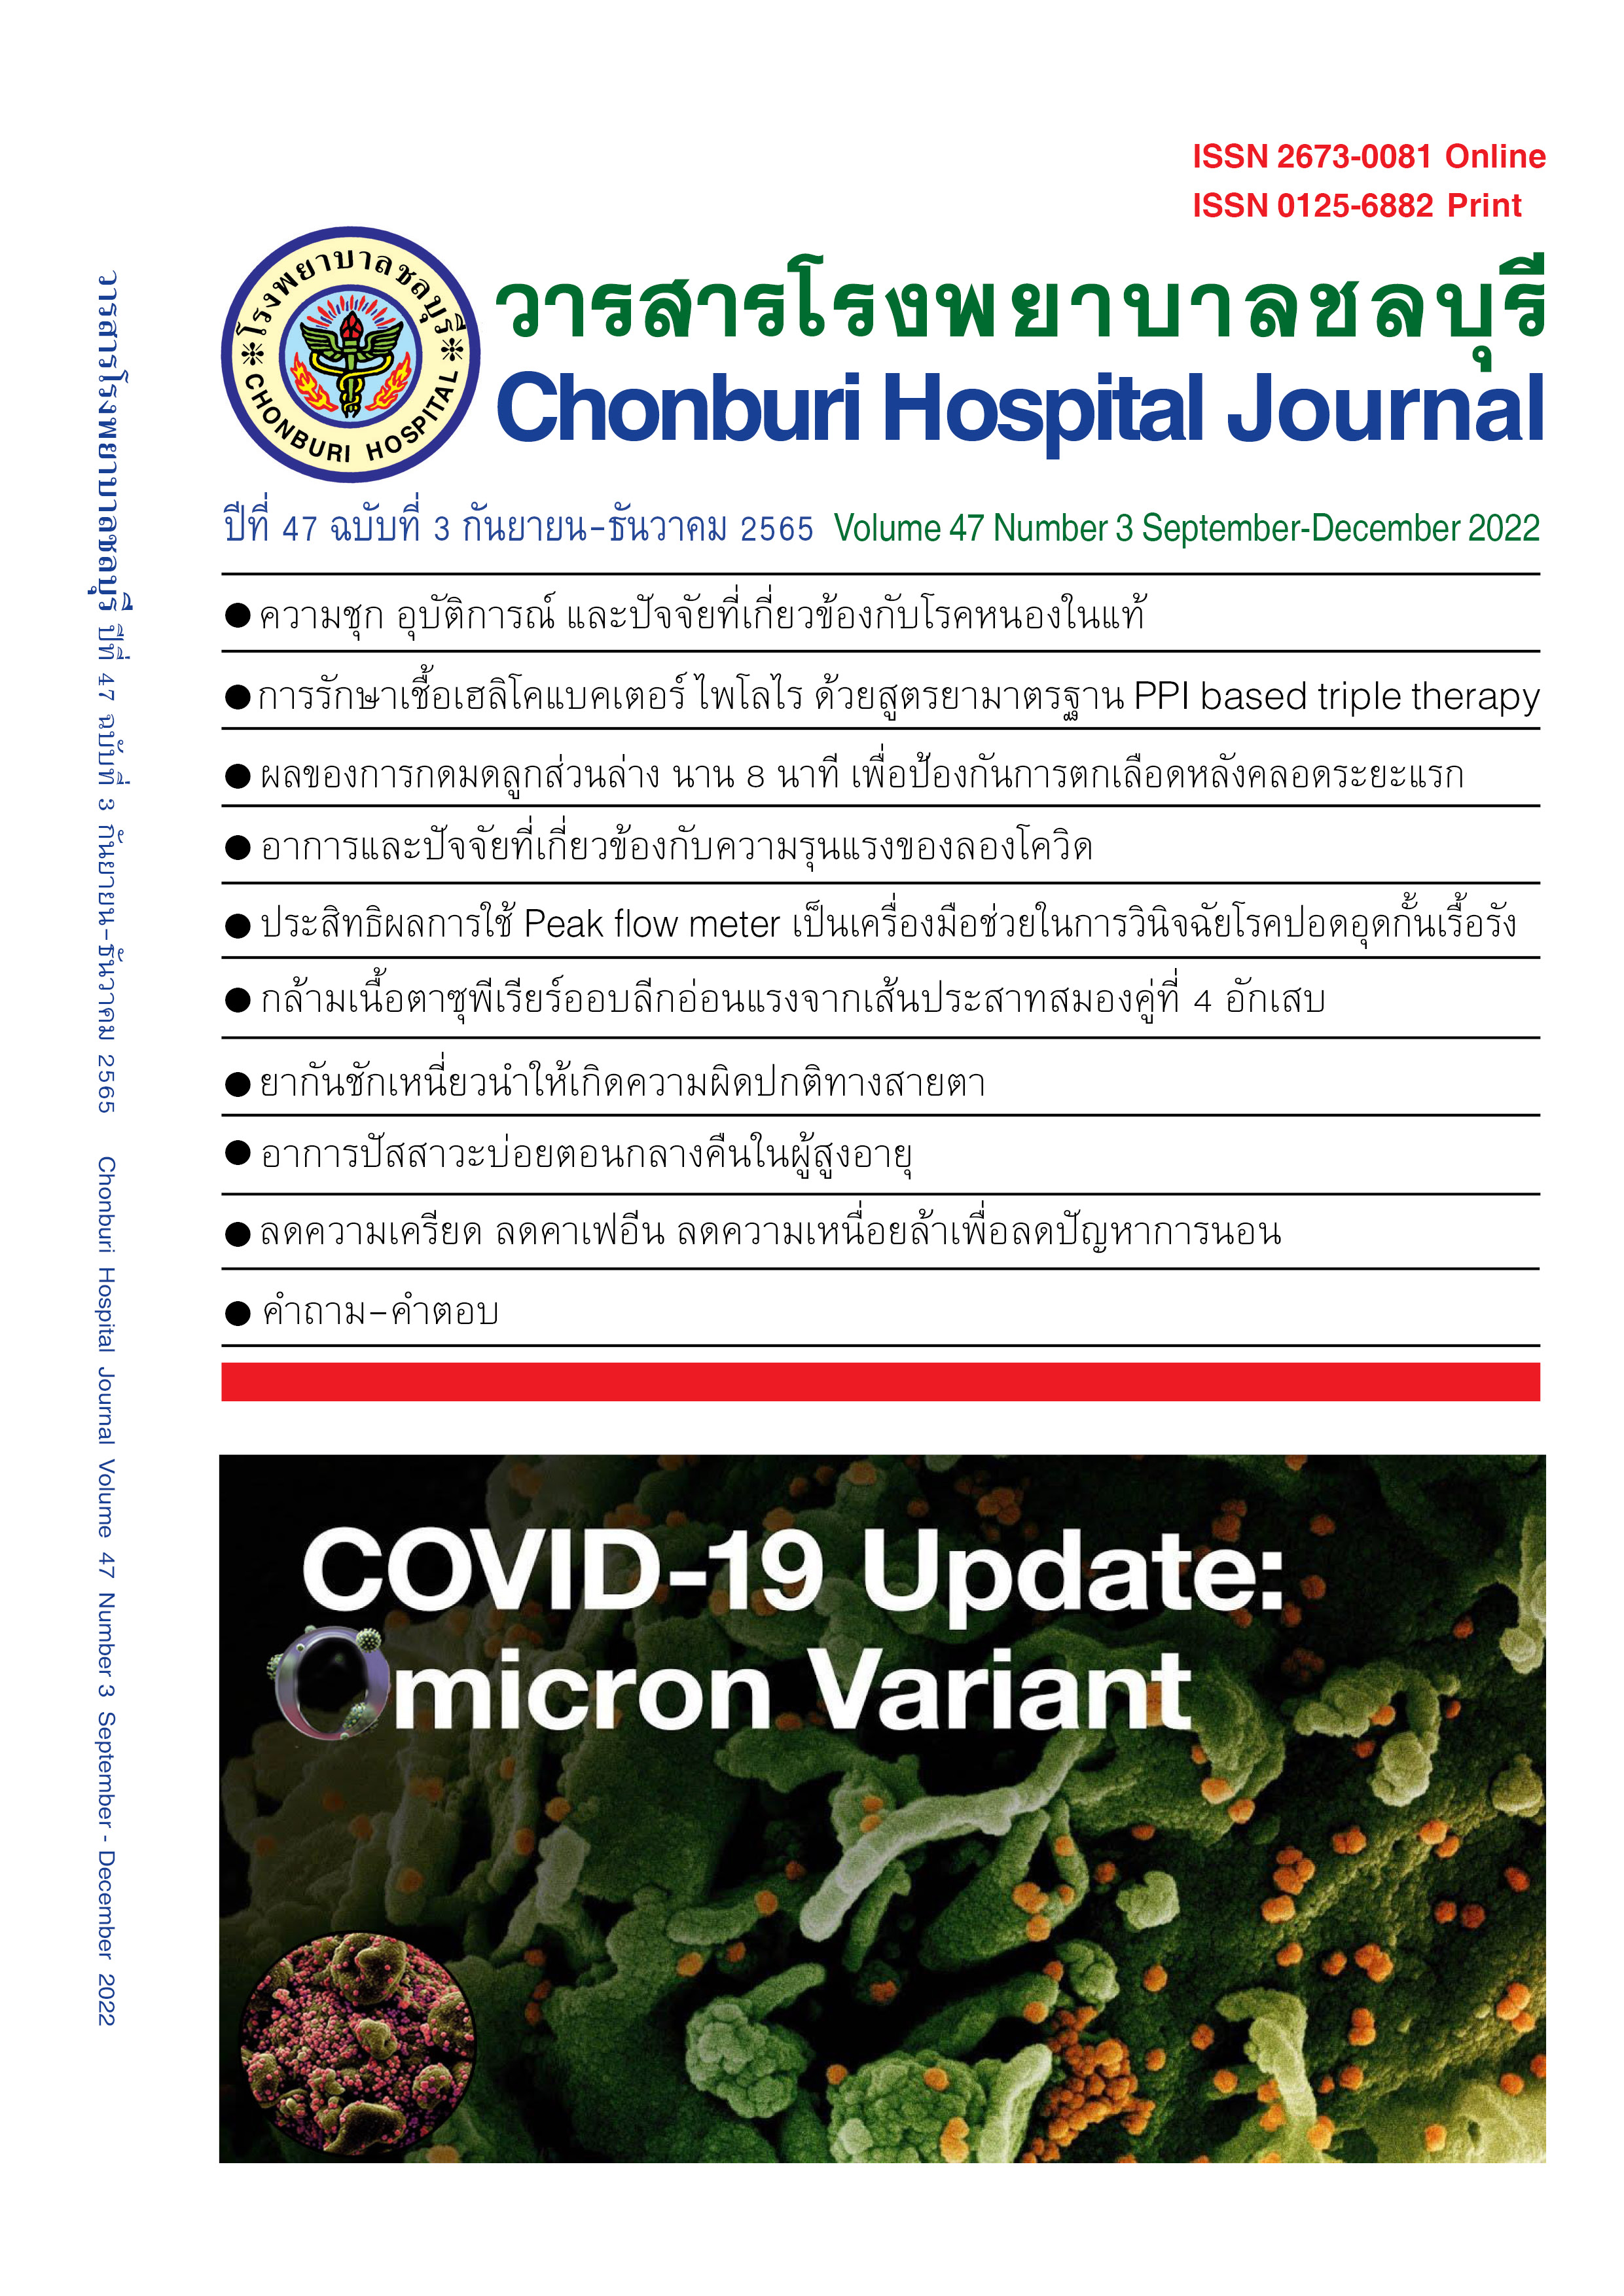 COVID-19 Update: Omicron Varient